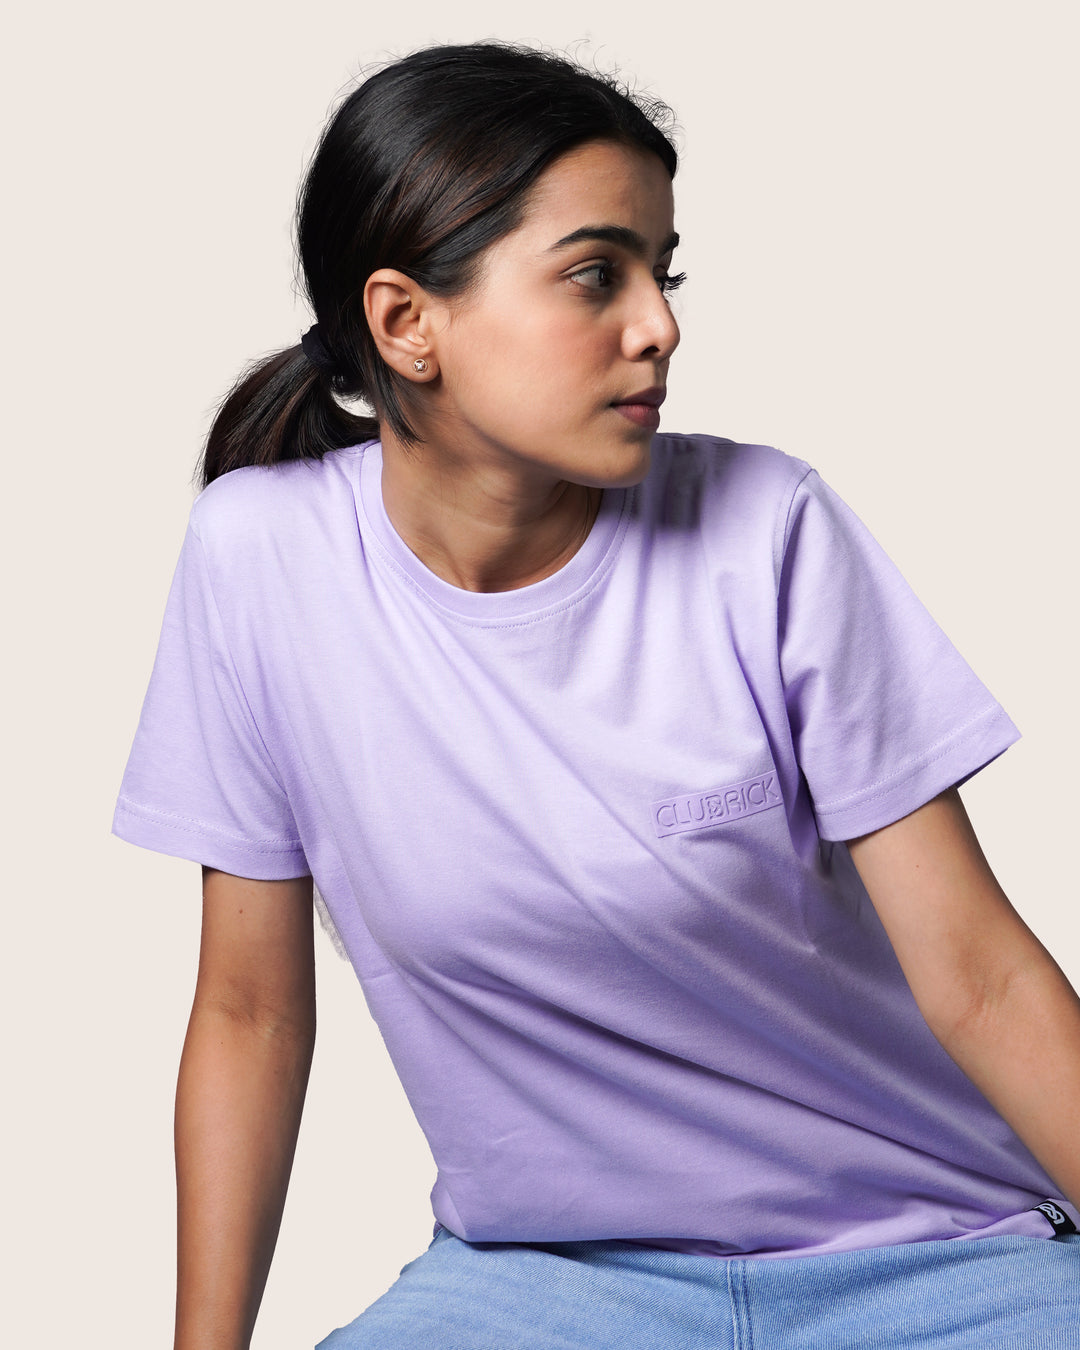 Feathersoft Home Comfort Women's Crewneck T-Shirt: Solid  Lavender